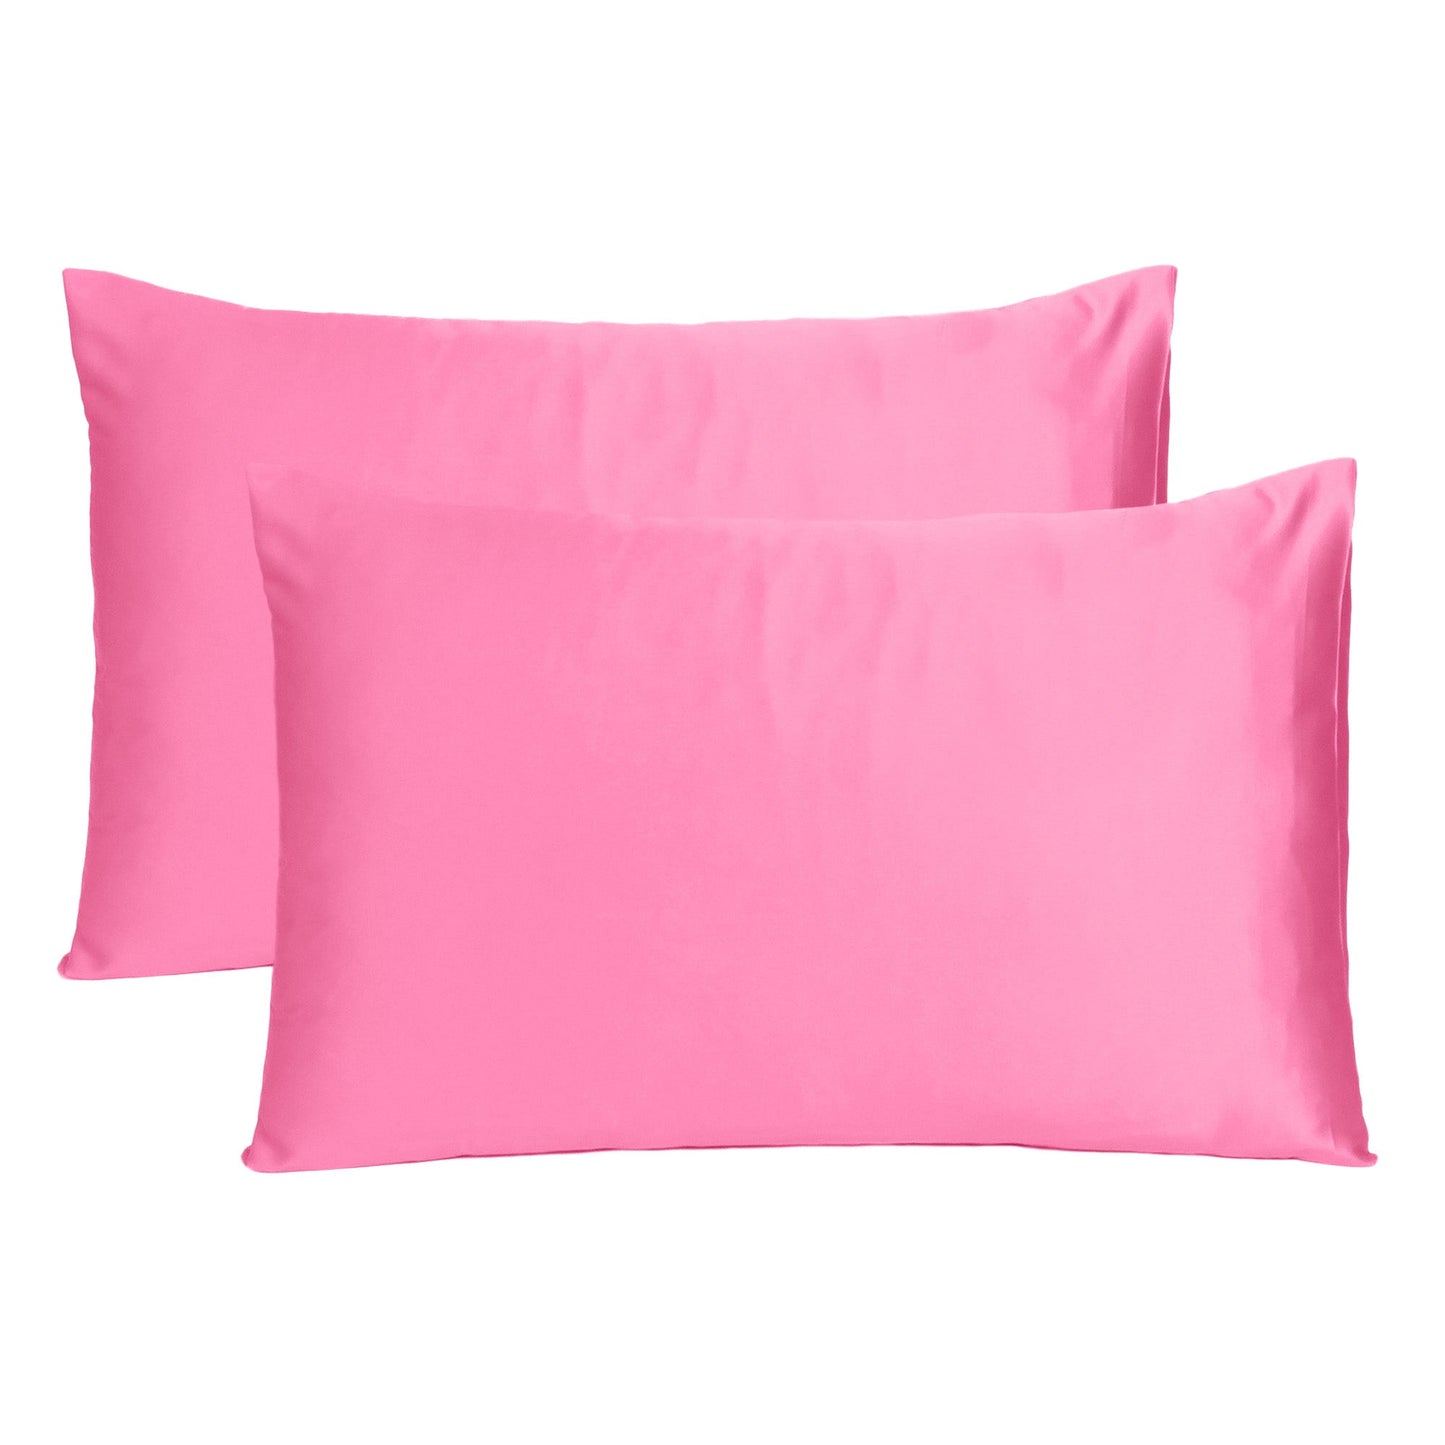 Luxury Soft Plain Satin Silk Pillowcases in Set of 2 - Fandango Pink